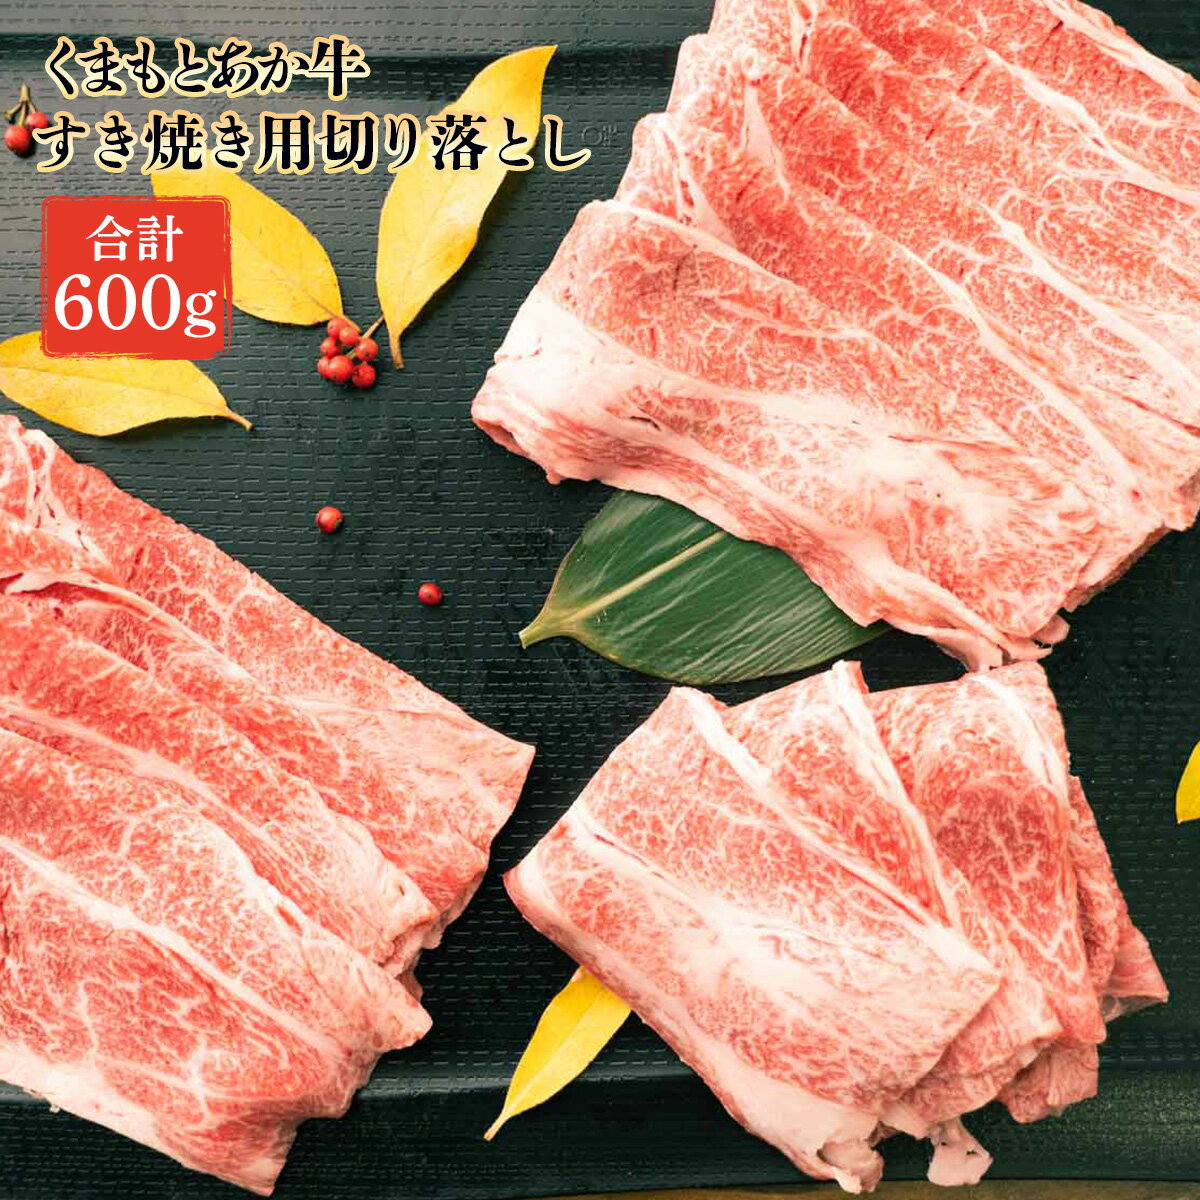 GI認証取得 くまもとあか牛 すき焼き用 切り落とし 600g (300g×2) 熊本県産 牛肉 和牛 国産 すきやき スキヤキ 冷凍 和牛 肉 ヘルシー 冷凍 送料無料